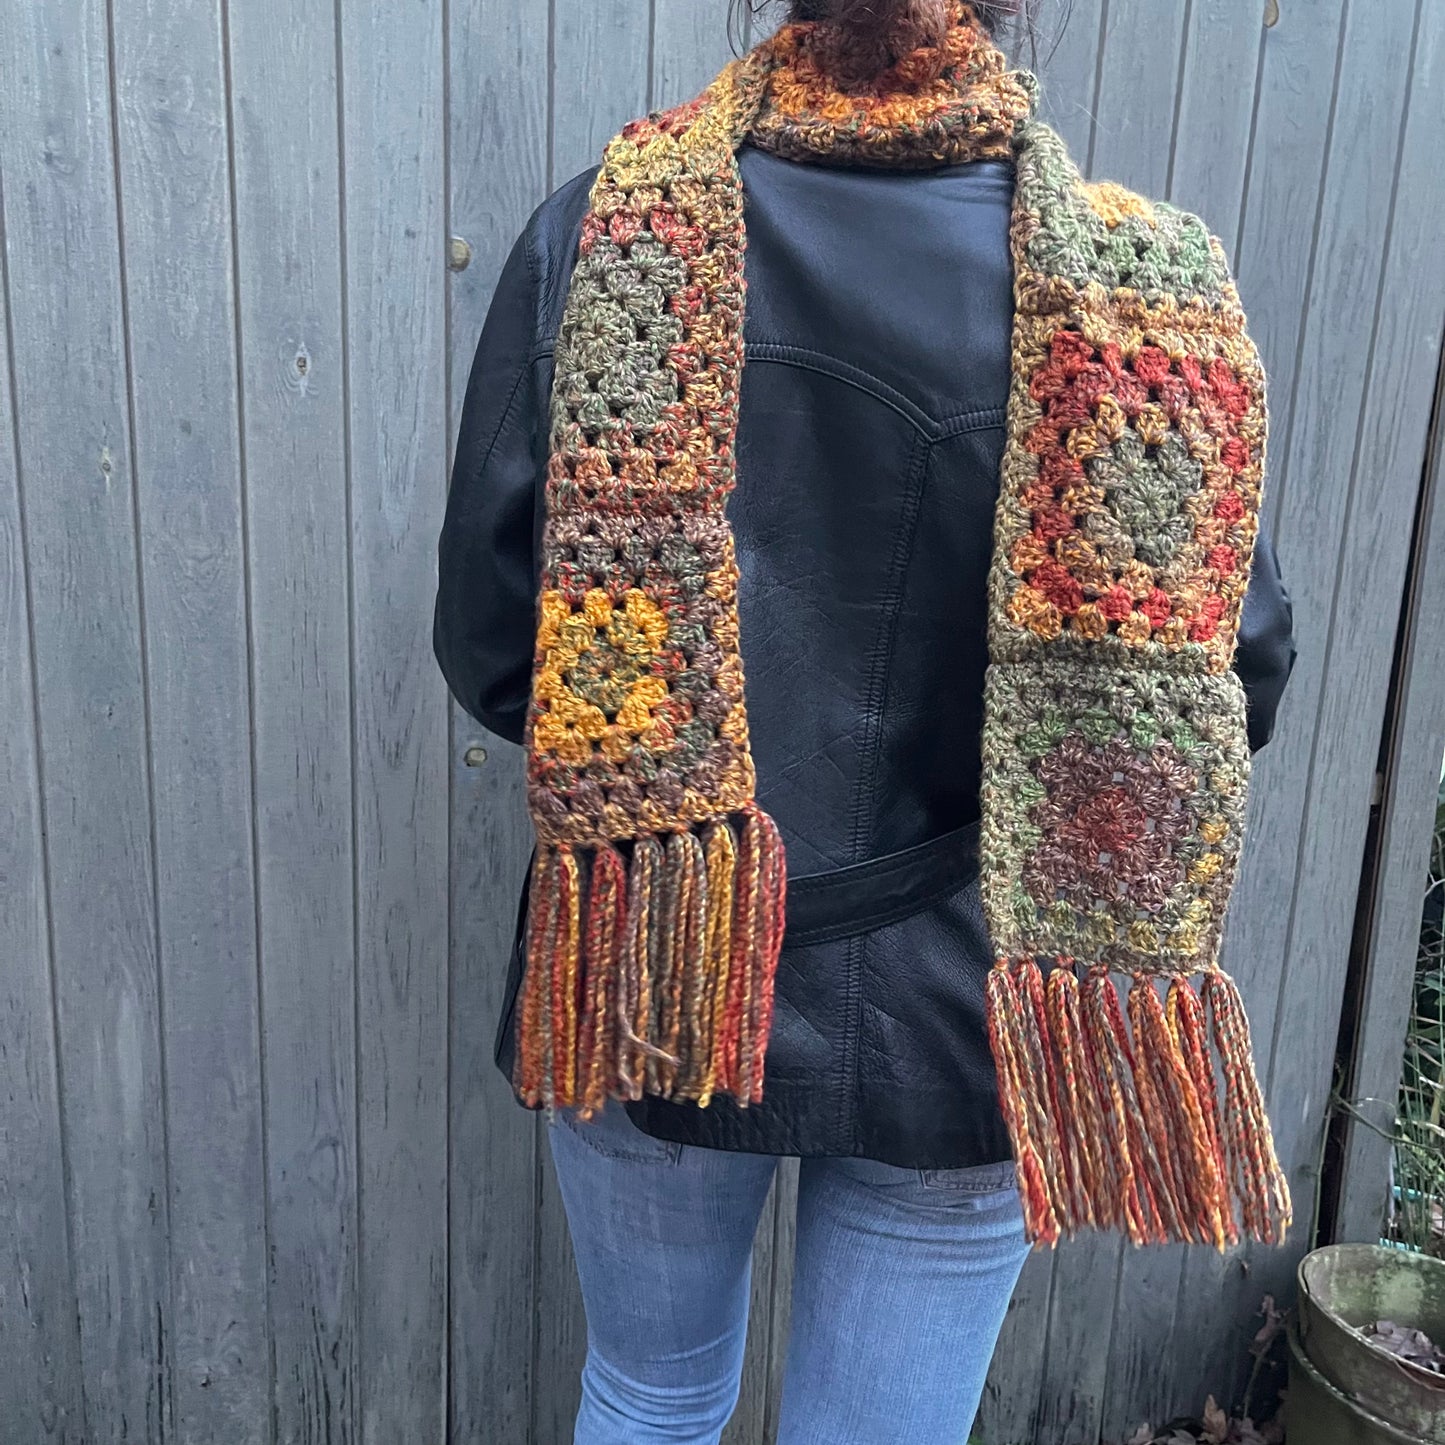 Handmade earth tones granny square crochet scarf